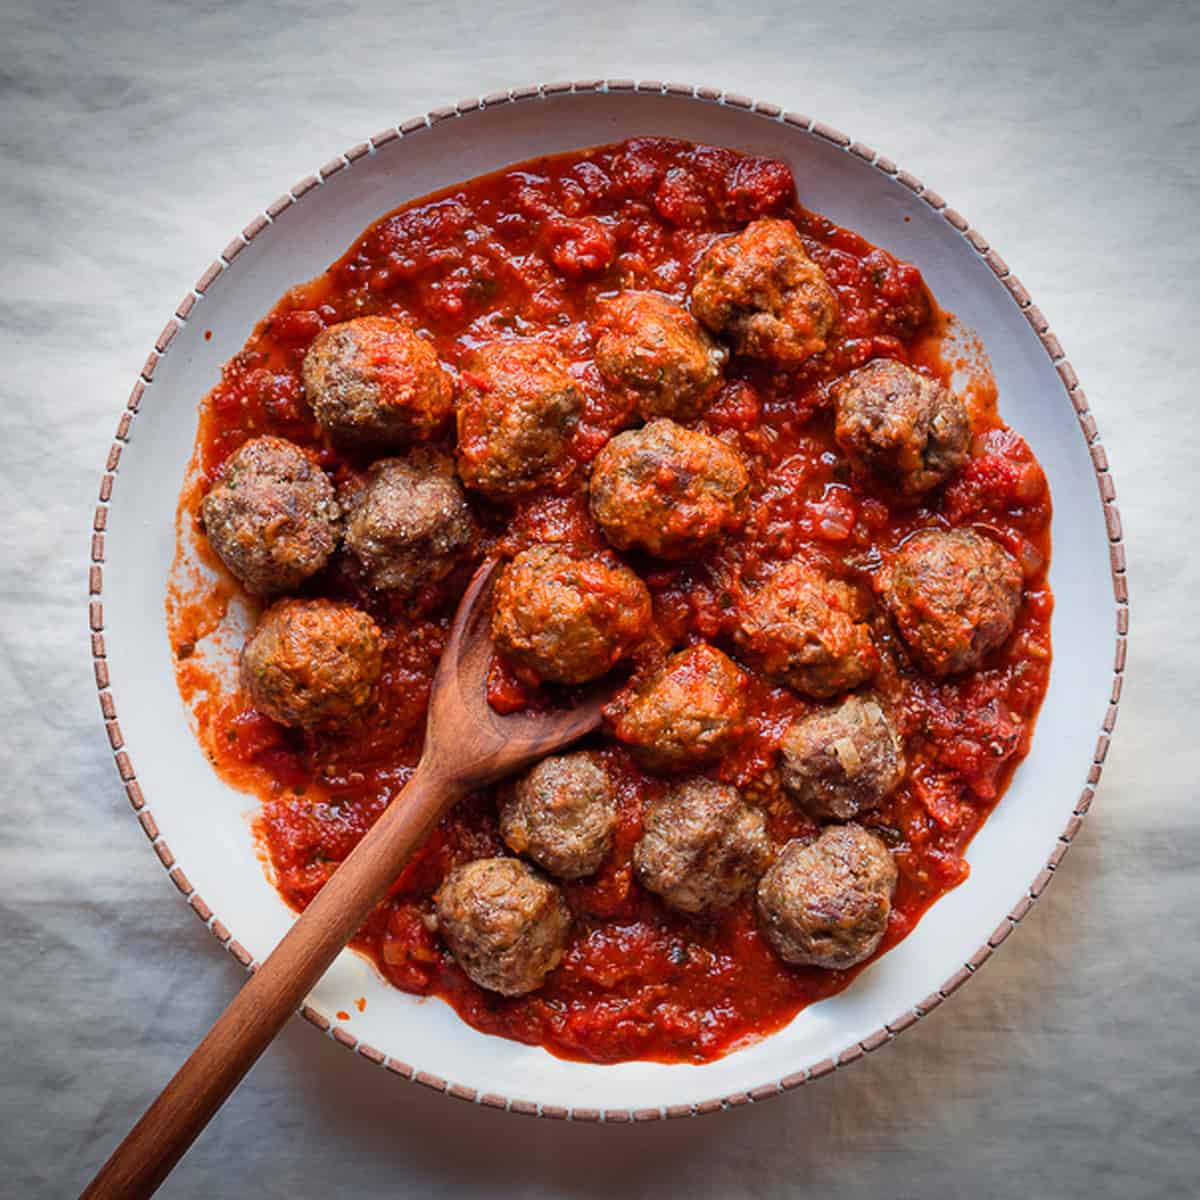 Spanish Style Lamb Meatballs with Spicy Tomato Sauce - Spanish meatball recipes